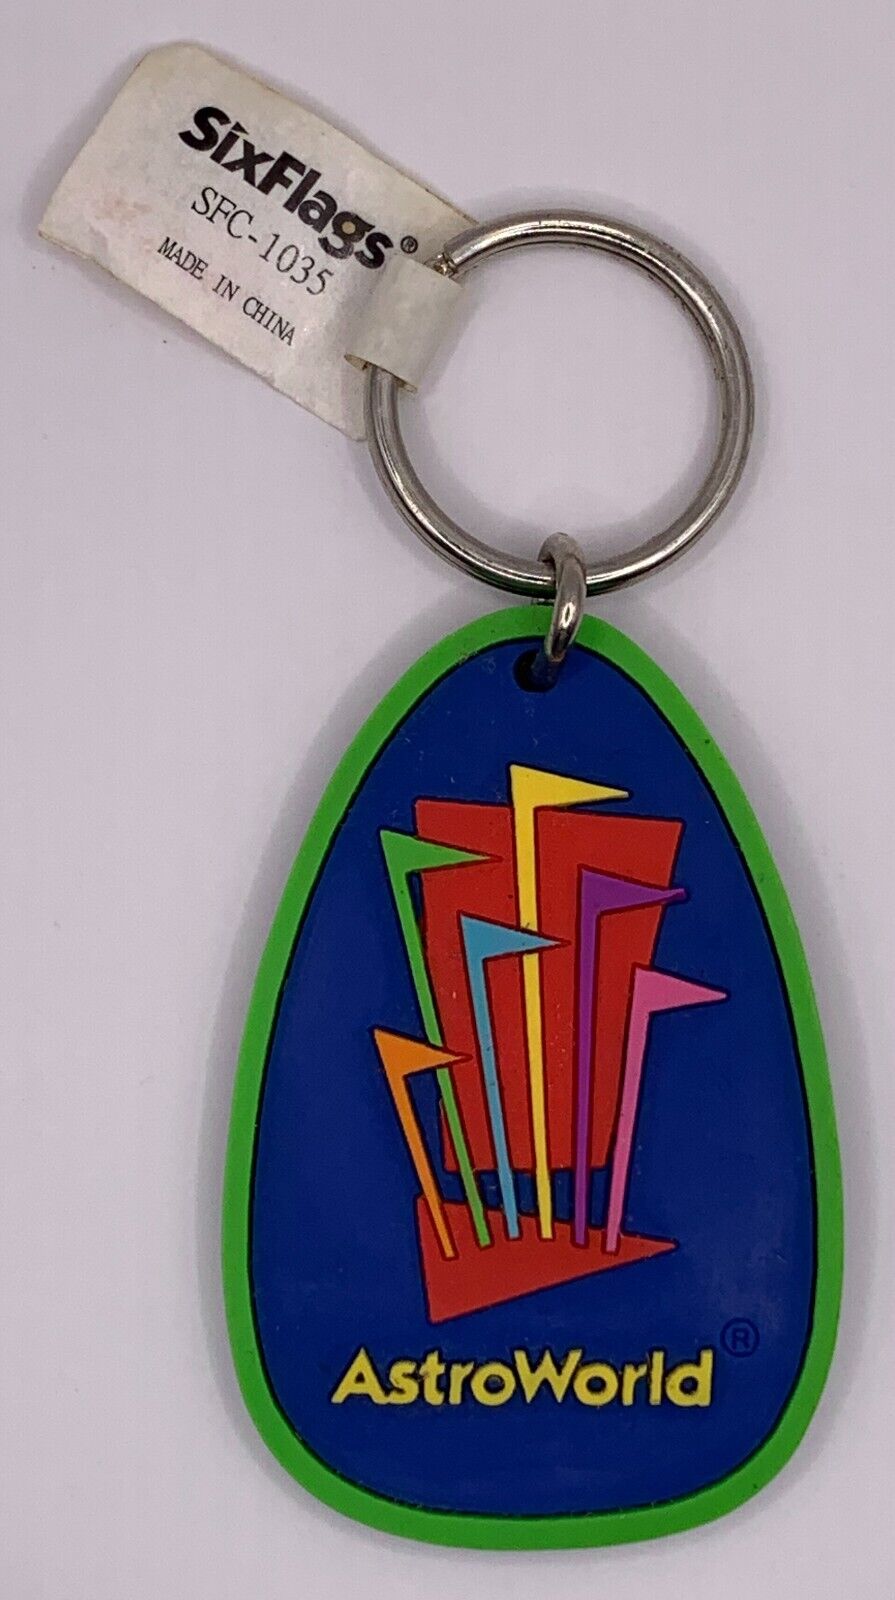 Six Flags AstroWorld Vintage Keychain Key Chain 2000 Houston